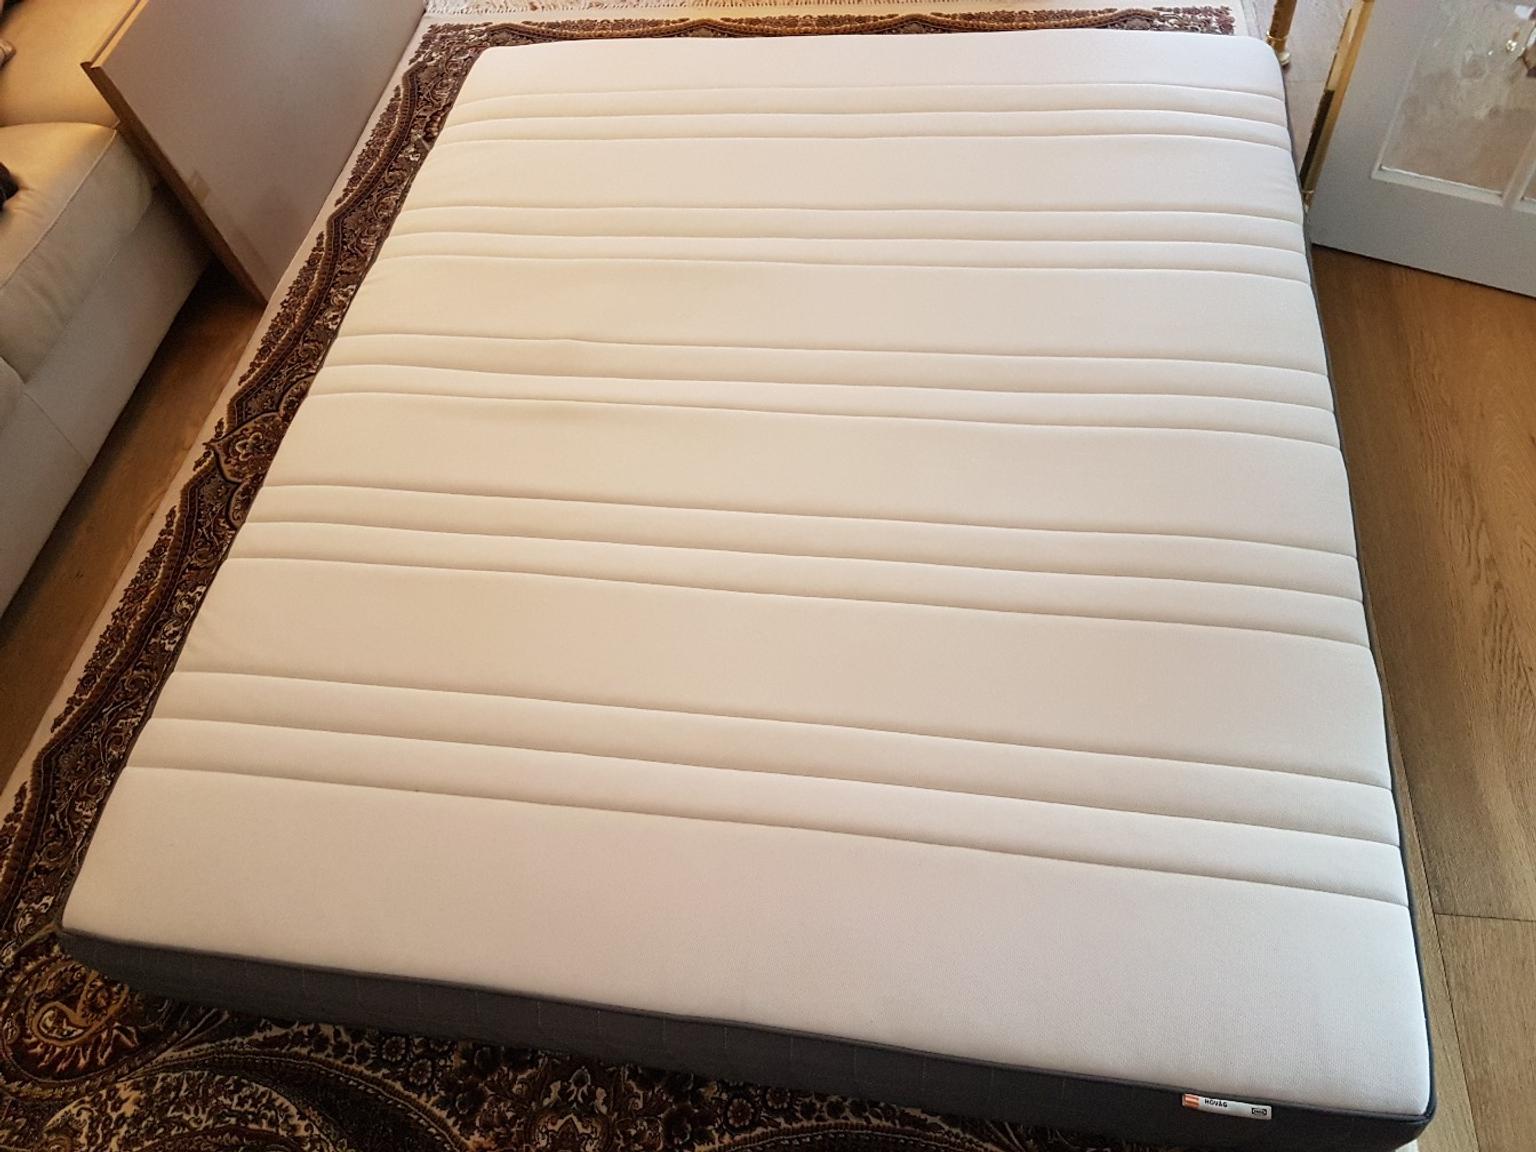 hovag mattress cover washing